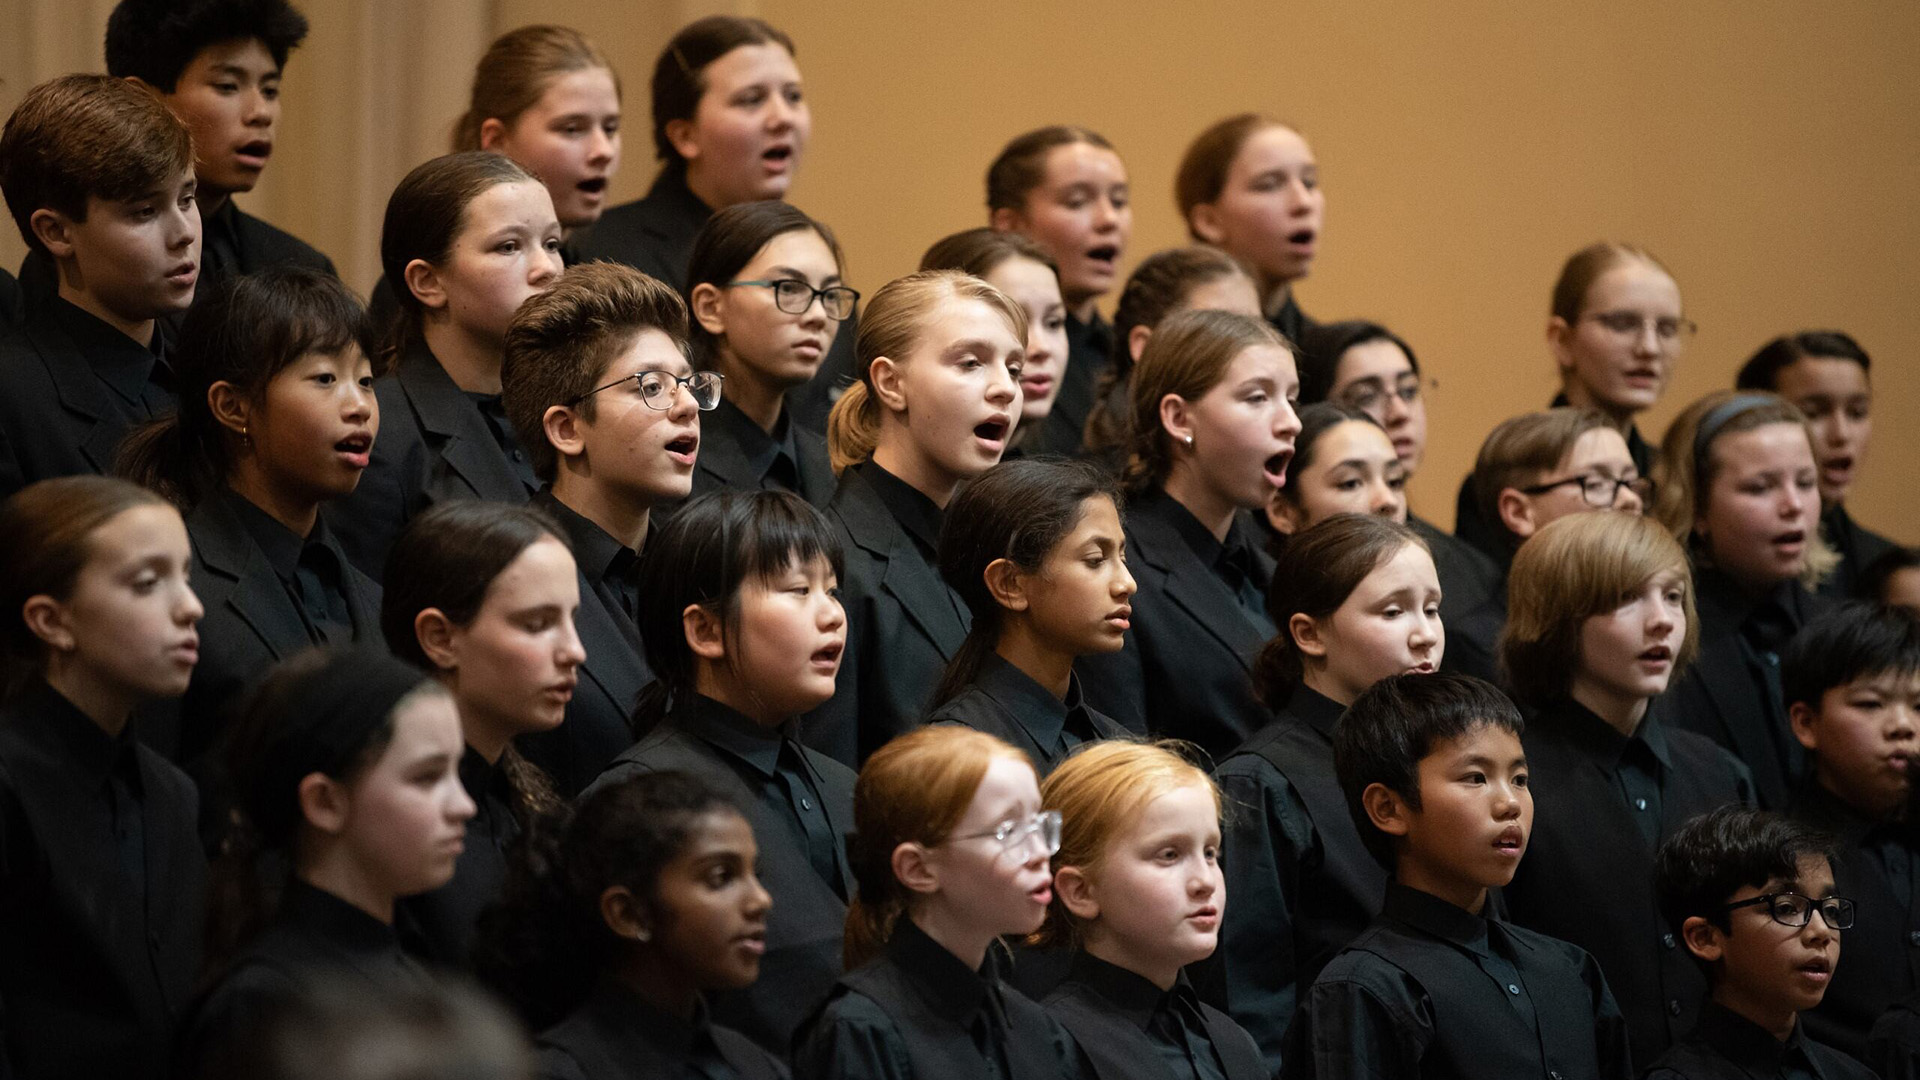 The Cleveland Orchestra Children's Chorus